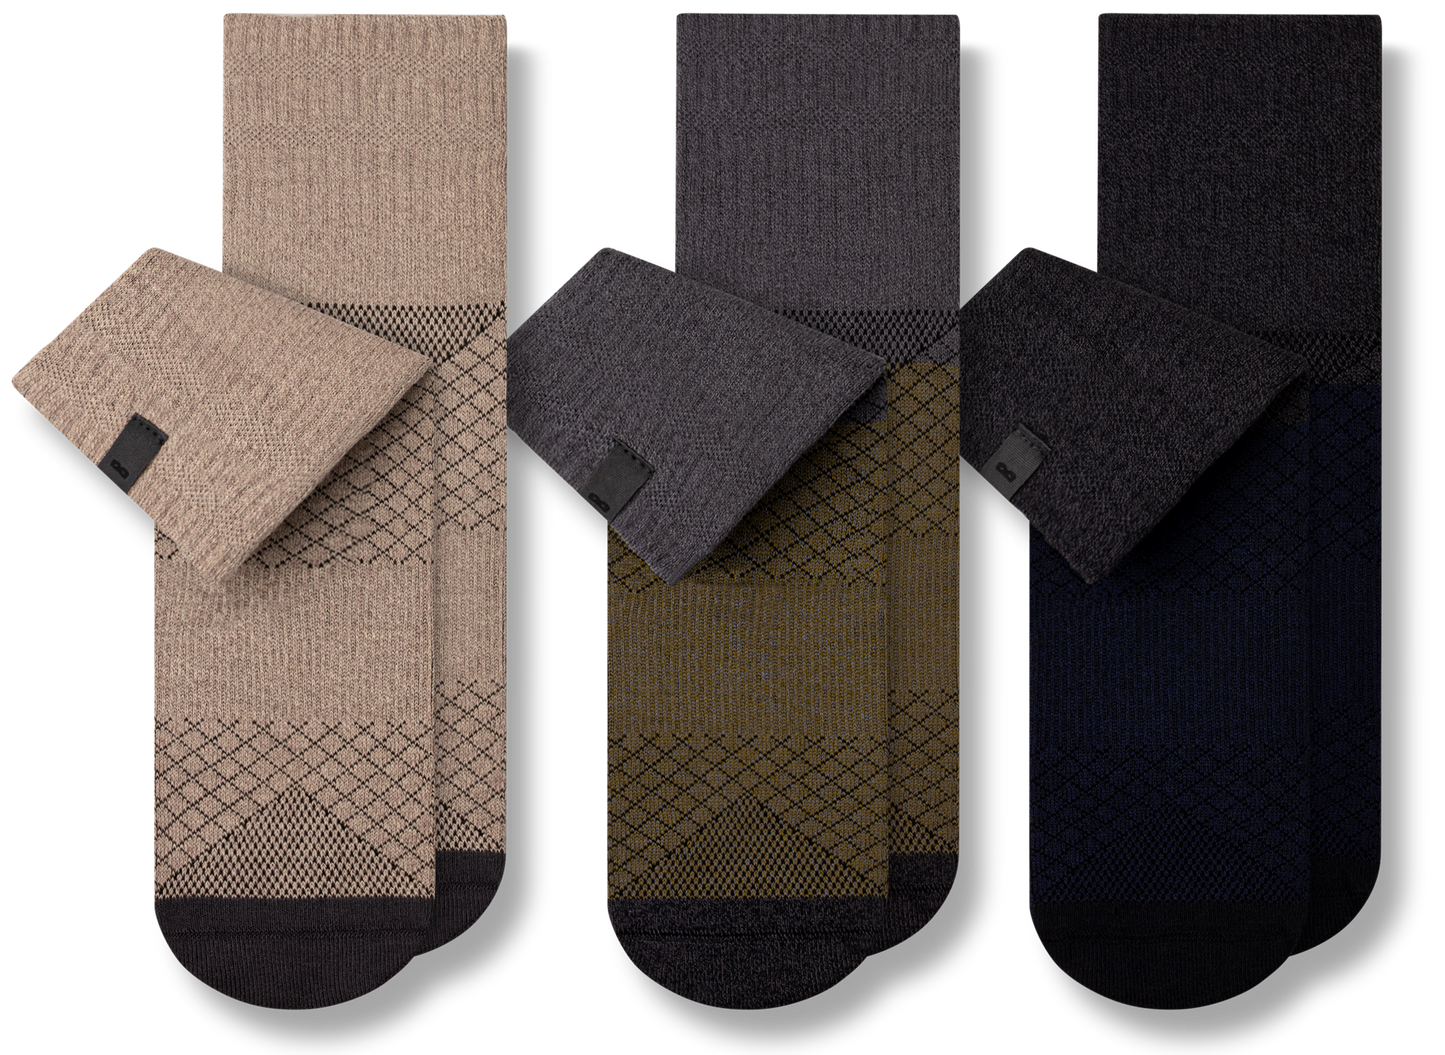 Hustle Cushion Ankle Socks 3 Pack colors contain: Black, Tan, Dark slate gray, Gray, Dim gray, Rosy brown, Black, Dark slate gray, Light Gray